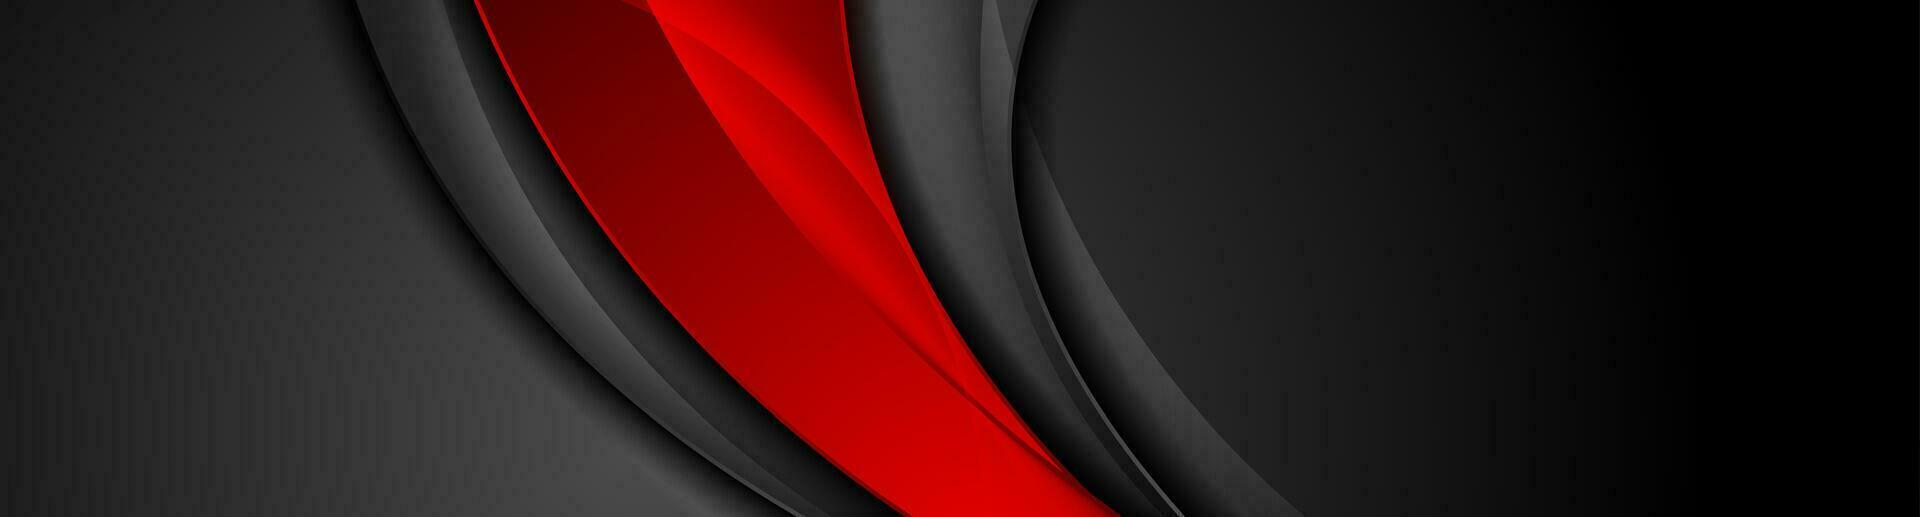 hoch Kontrast rot schwarz abstrakt Technik korporativ Banner Design vektor